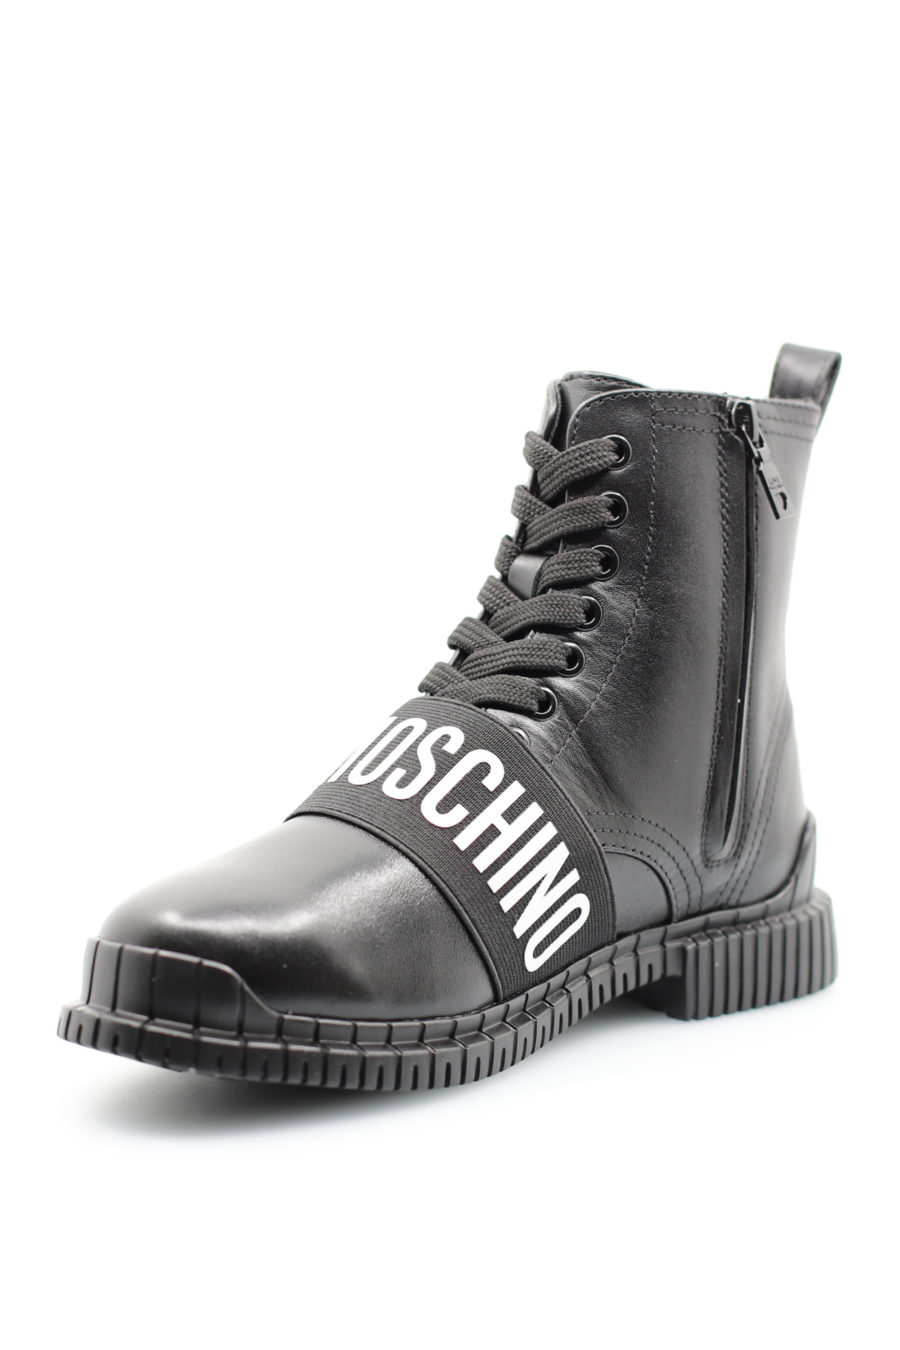 Black ankle boots with large logo - a9e4974dde55f13ea024f89d13218baa08b59549